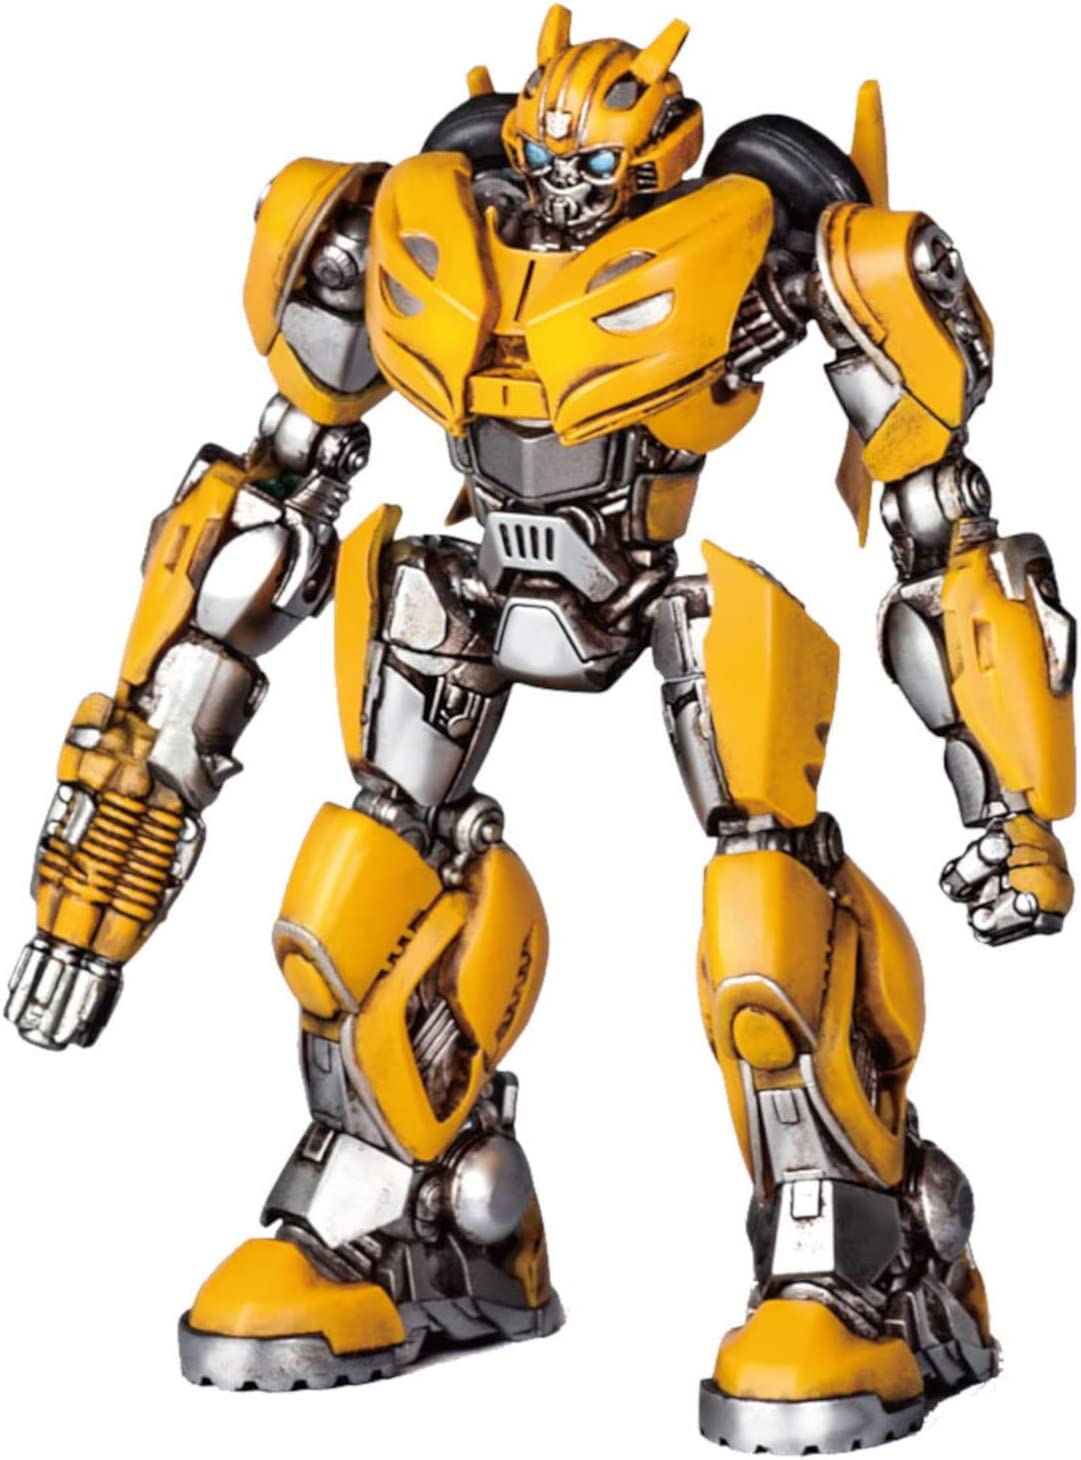 Transformers Bumblebee [B-127 Bumblebee]